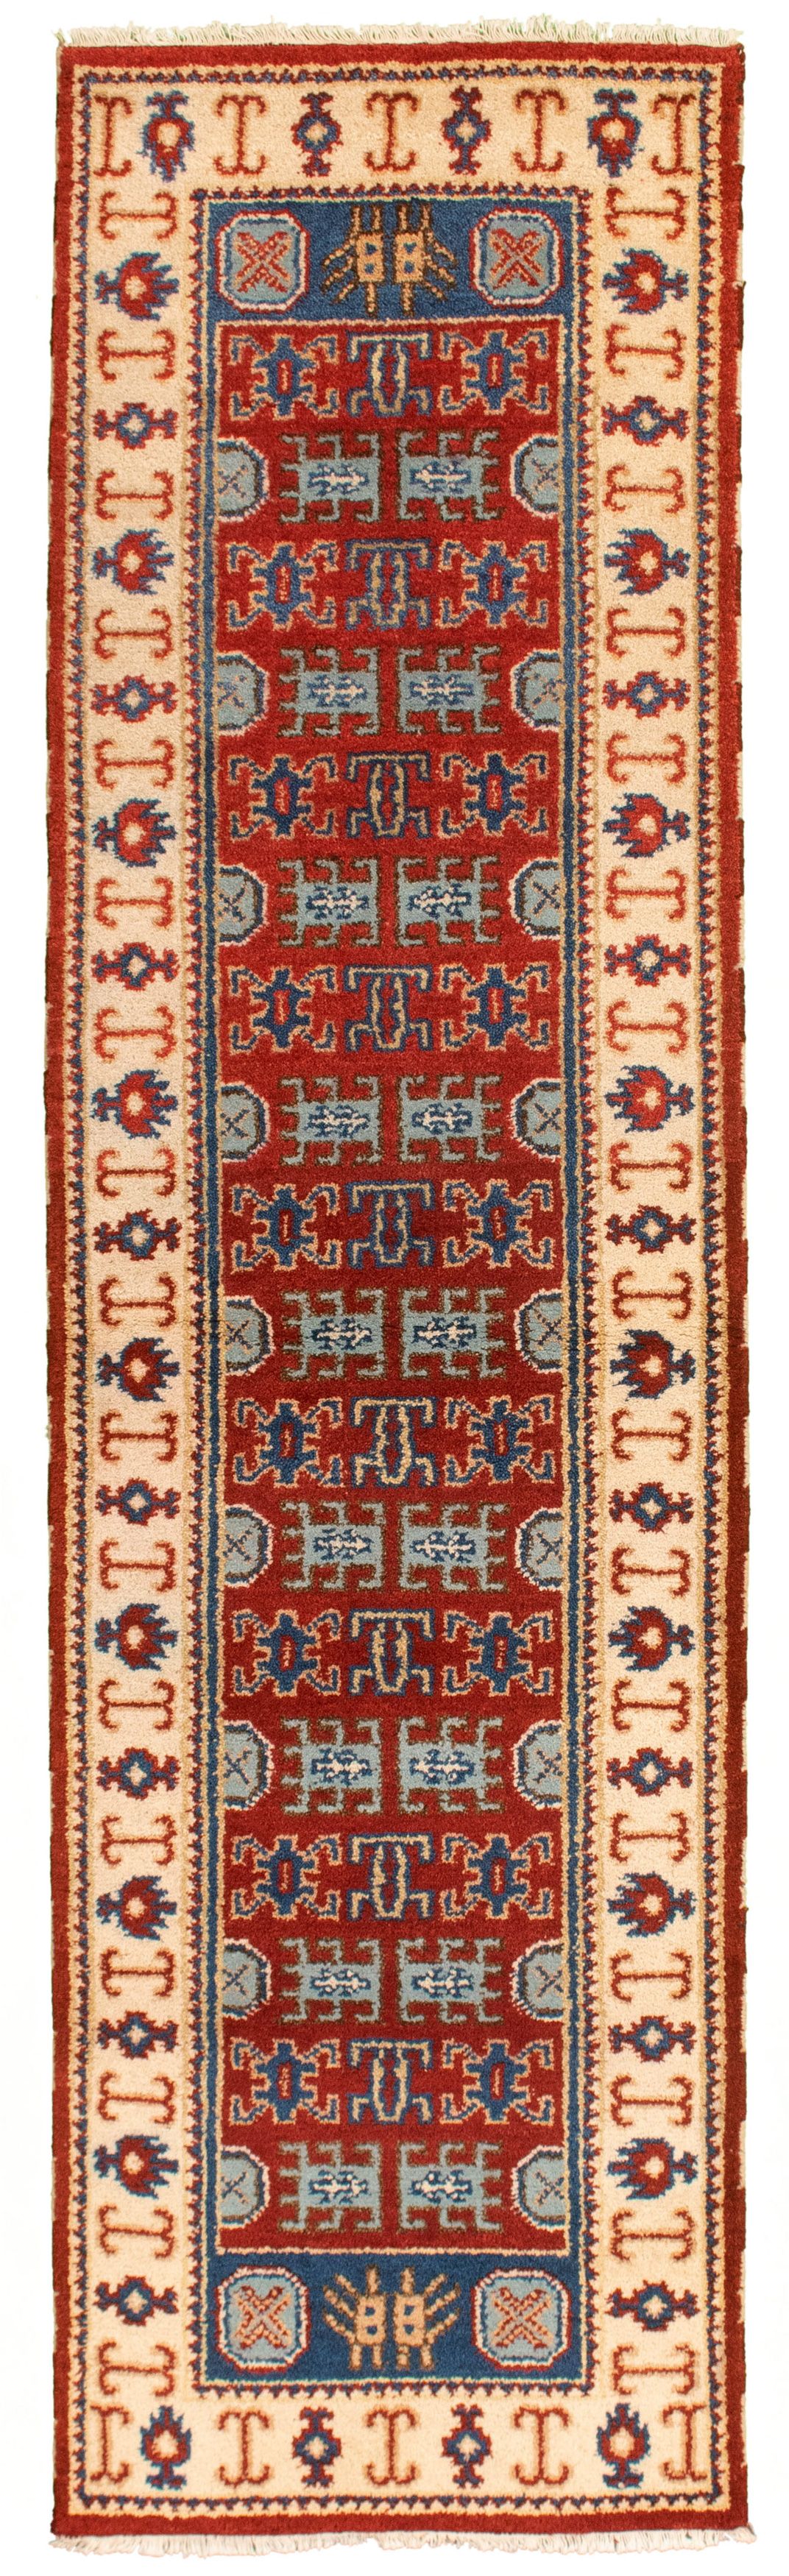 Hand-knotted Royal Kazak Dark Red Wool Rug 2'8" x 10'0"  Size: 2'8" x 10'0"  